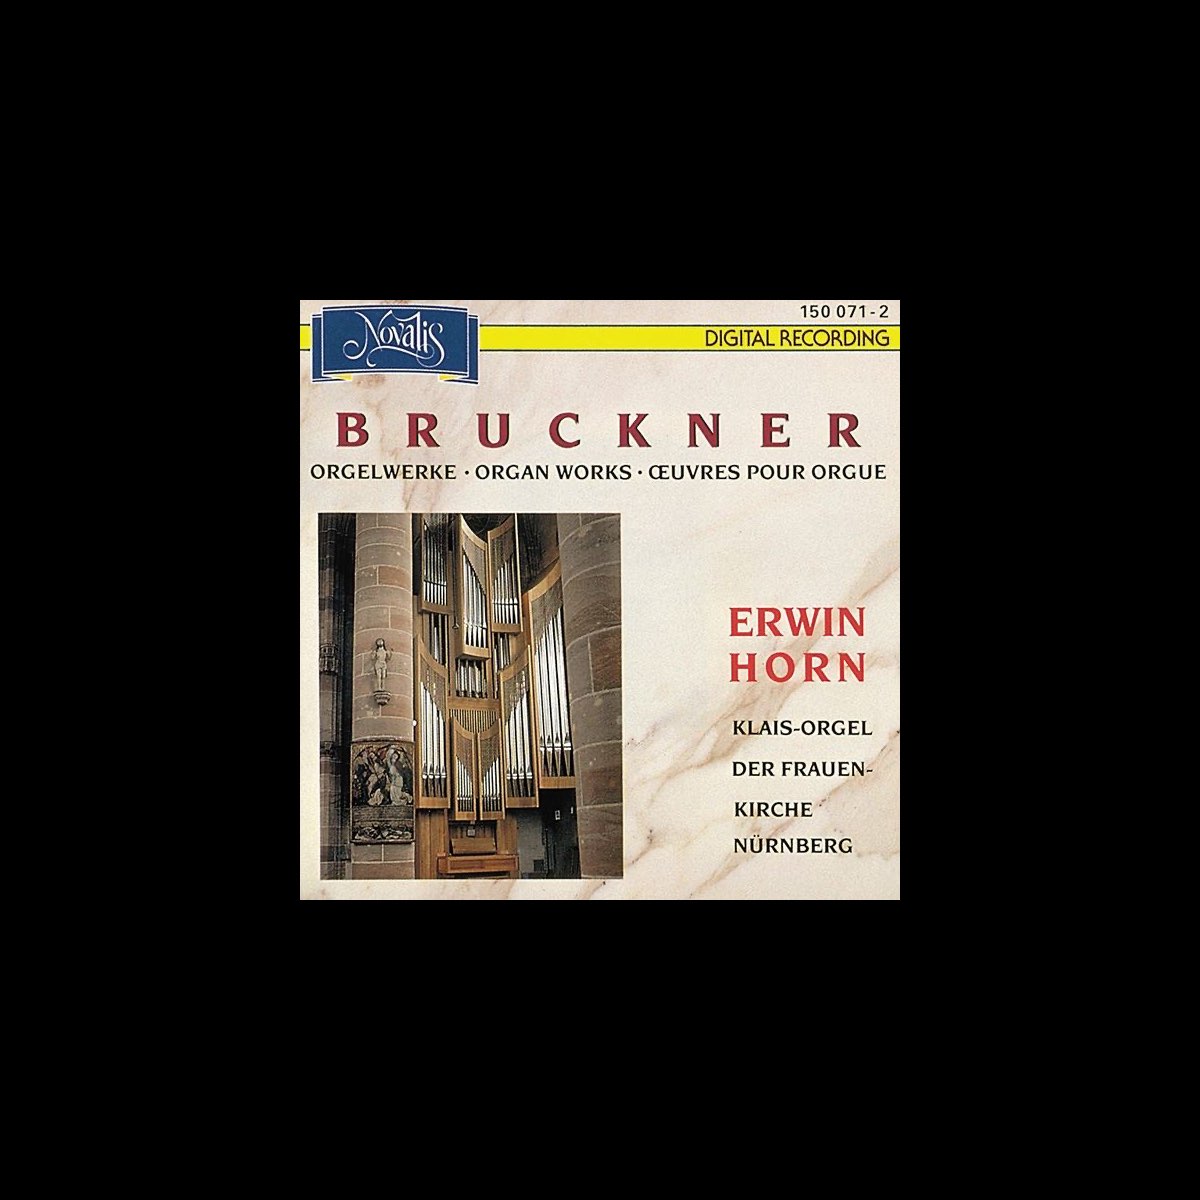 Bruckner: Organ Works - Album by Erwin Horn - Apple Music